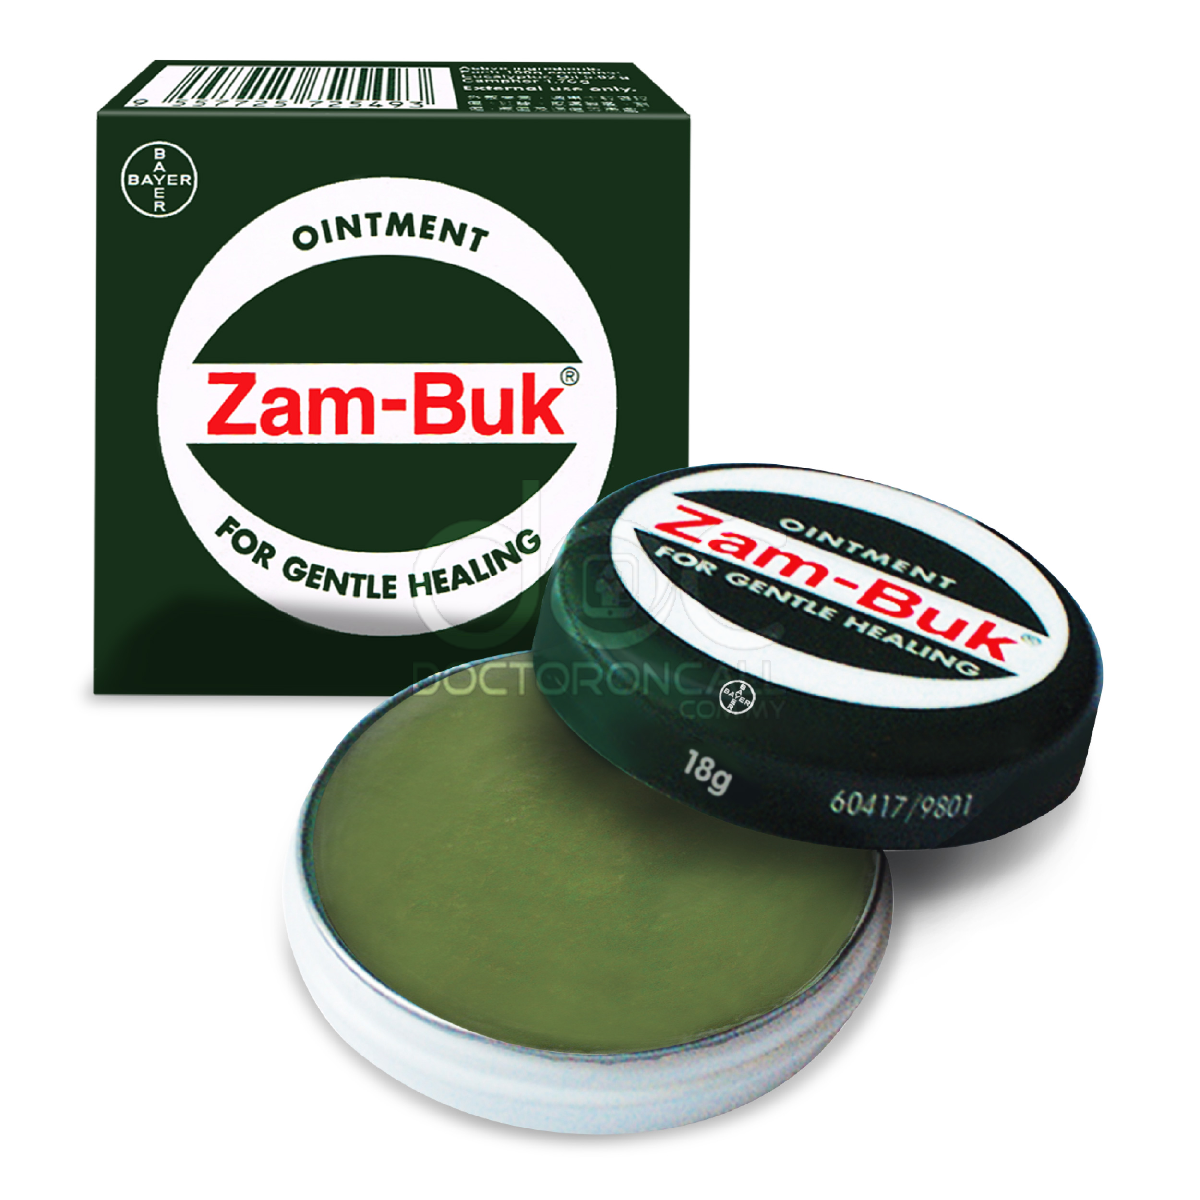 Zam-Buk Interthai Ointment 18g - DoctorOnCall Online Pharmacy